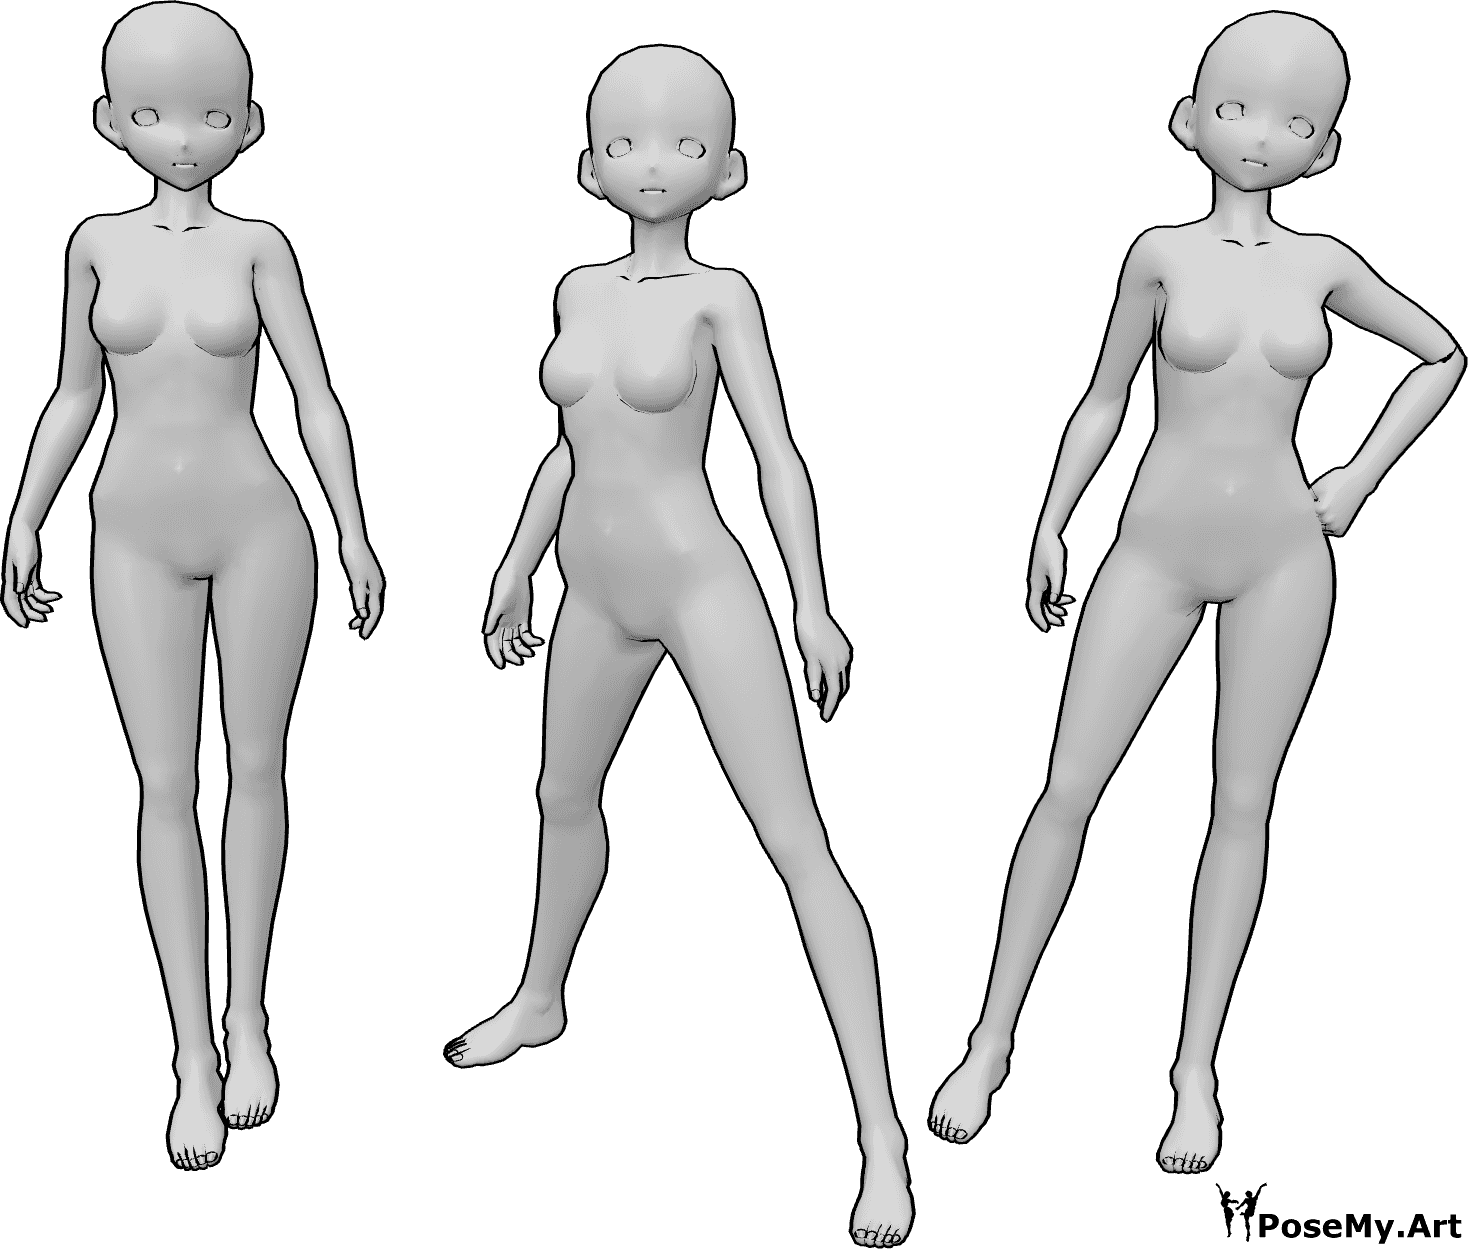 Referencia de poses- Tres mujeres anime posan - Tres mujeres anime posan con confianza, como modelos.